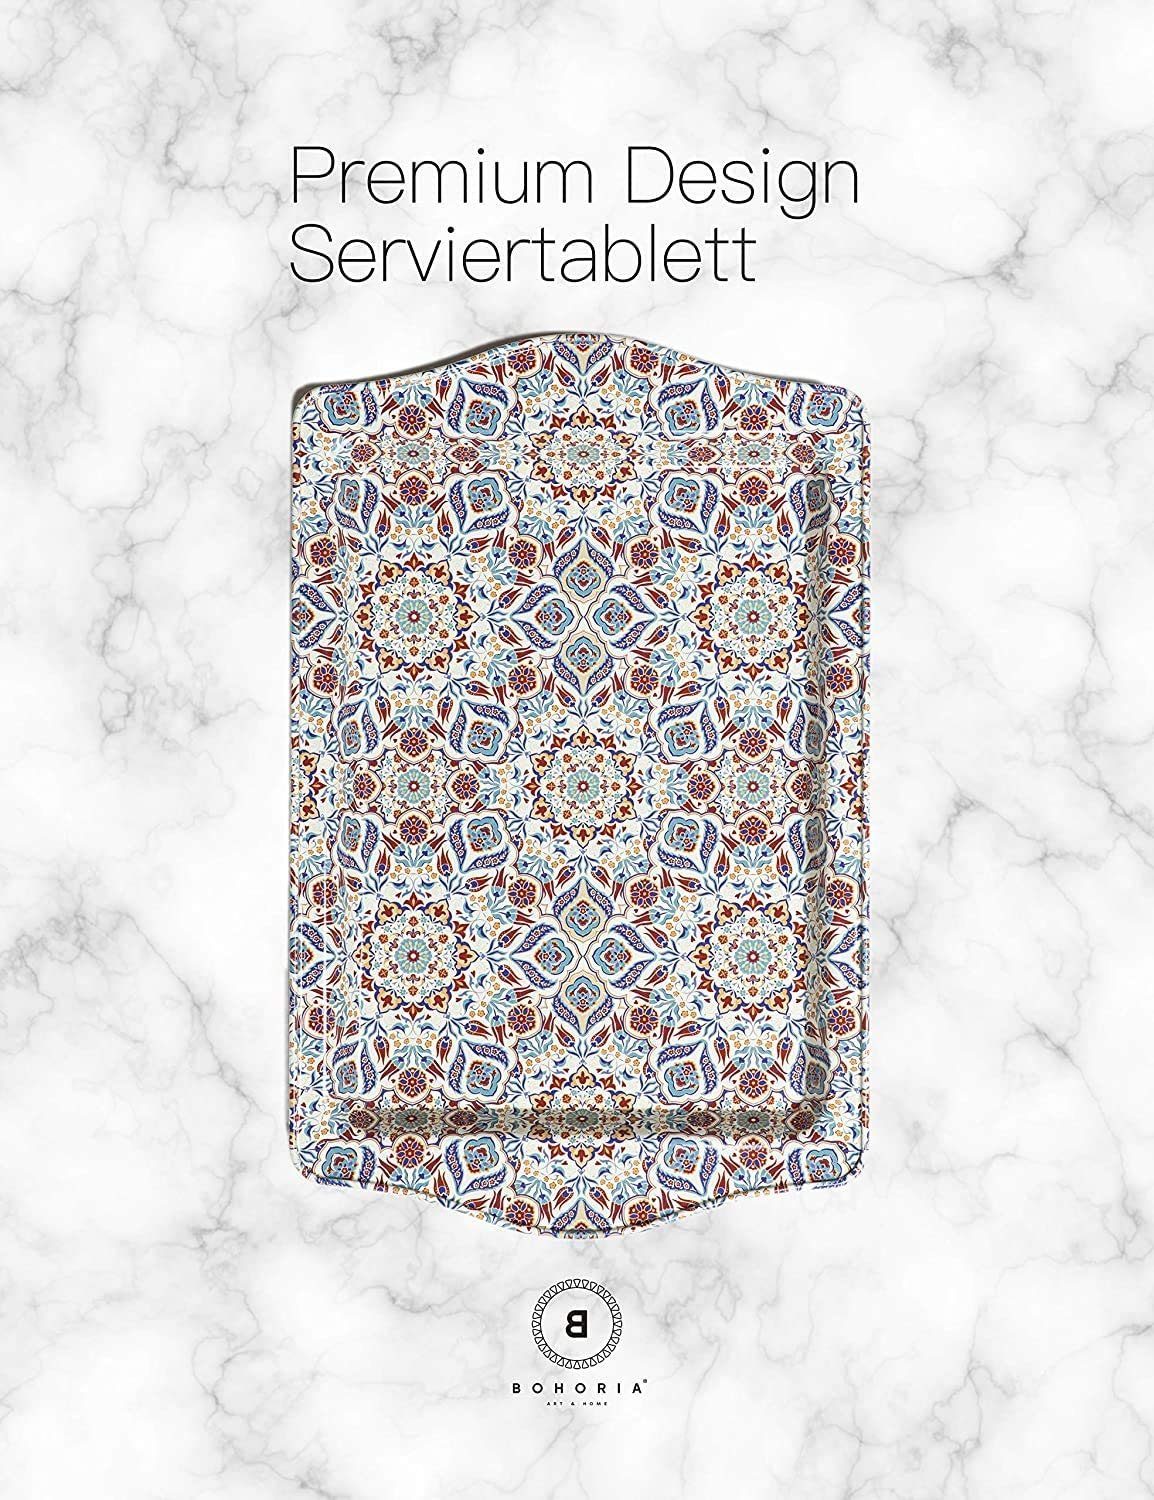 BOHORIA Dekotablett BOHORIA Serviertablett Marrakech Set 2er Premium